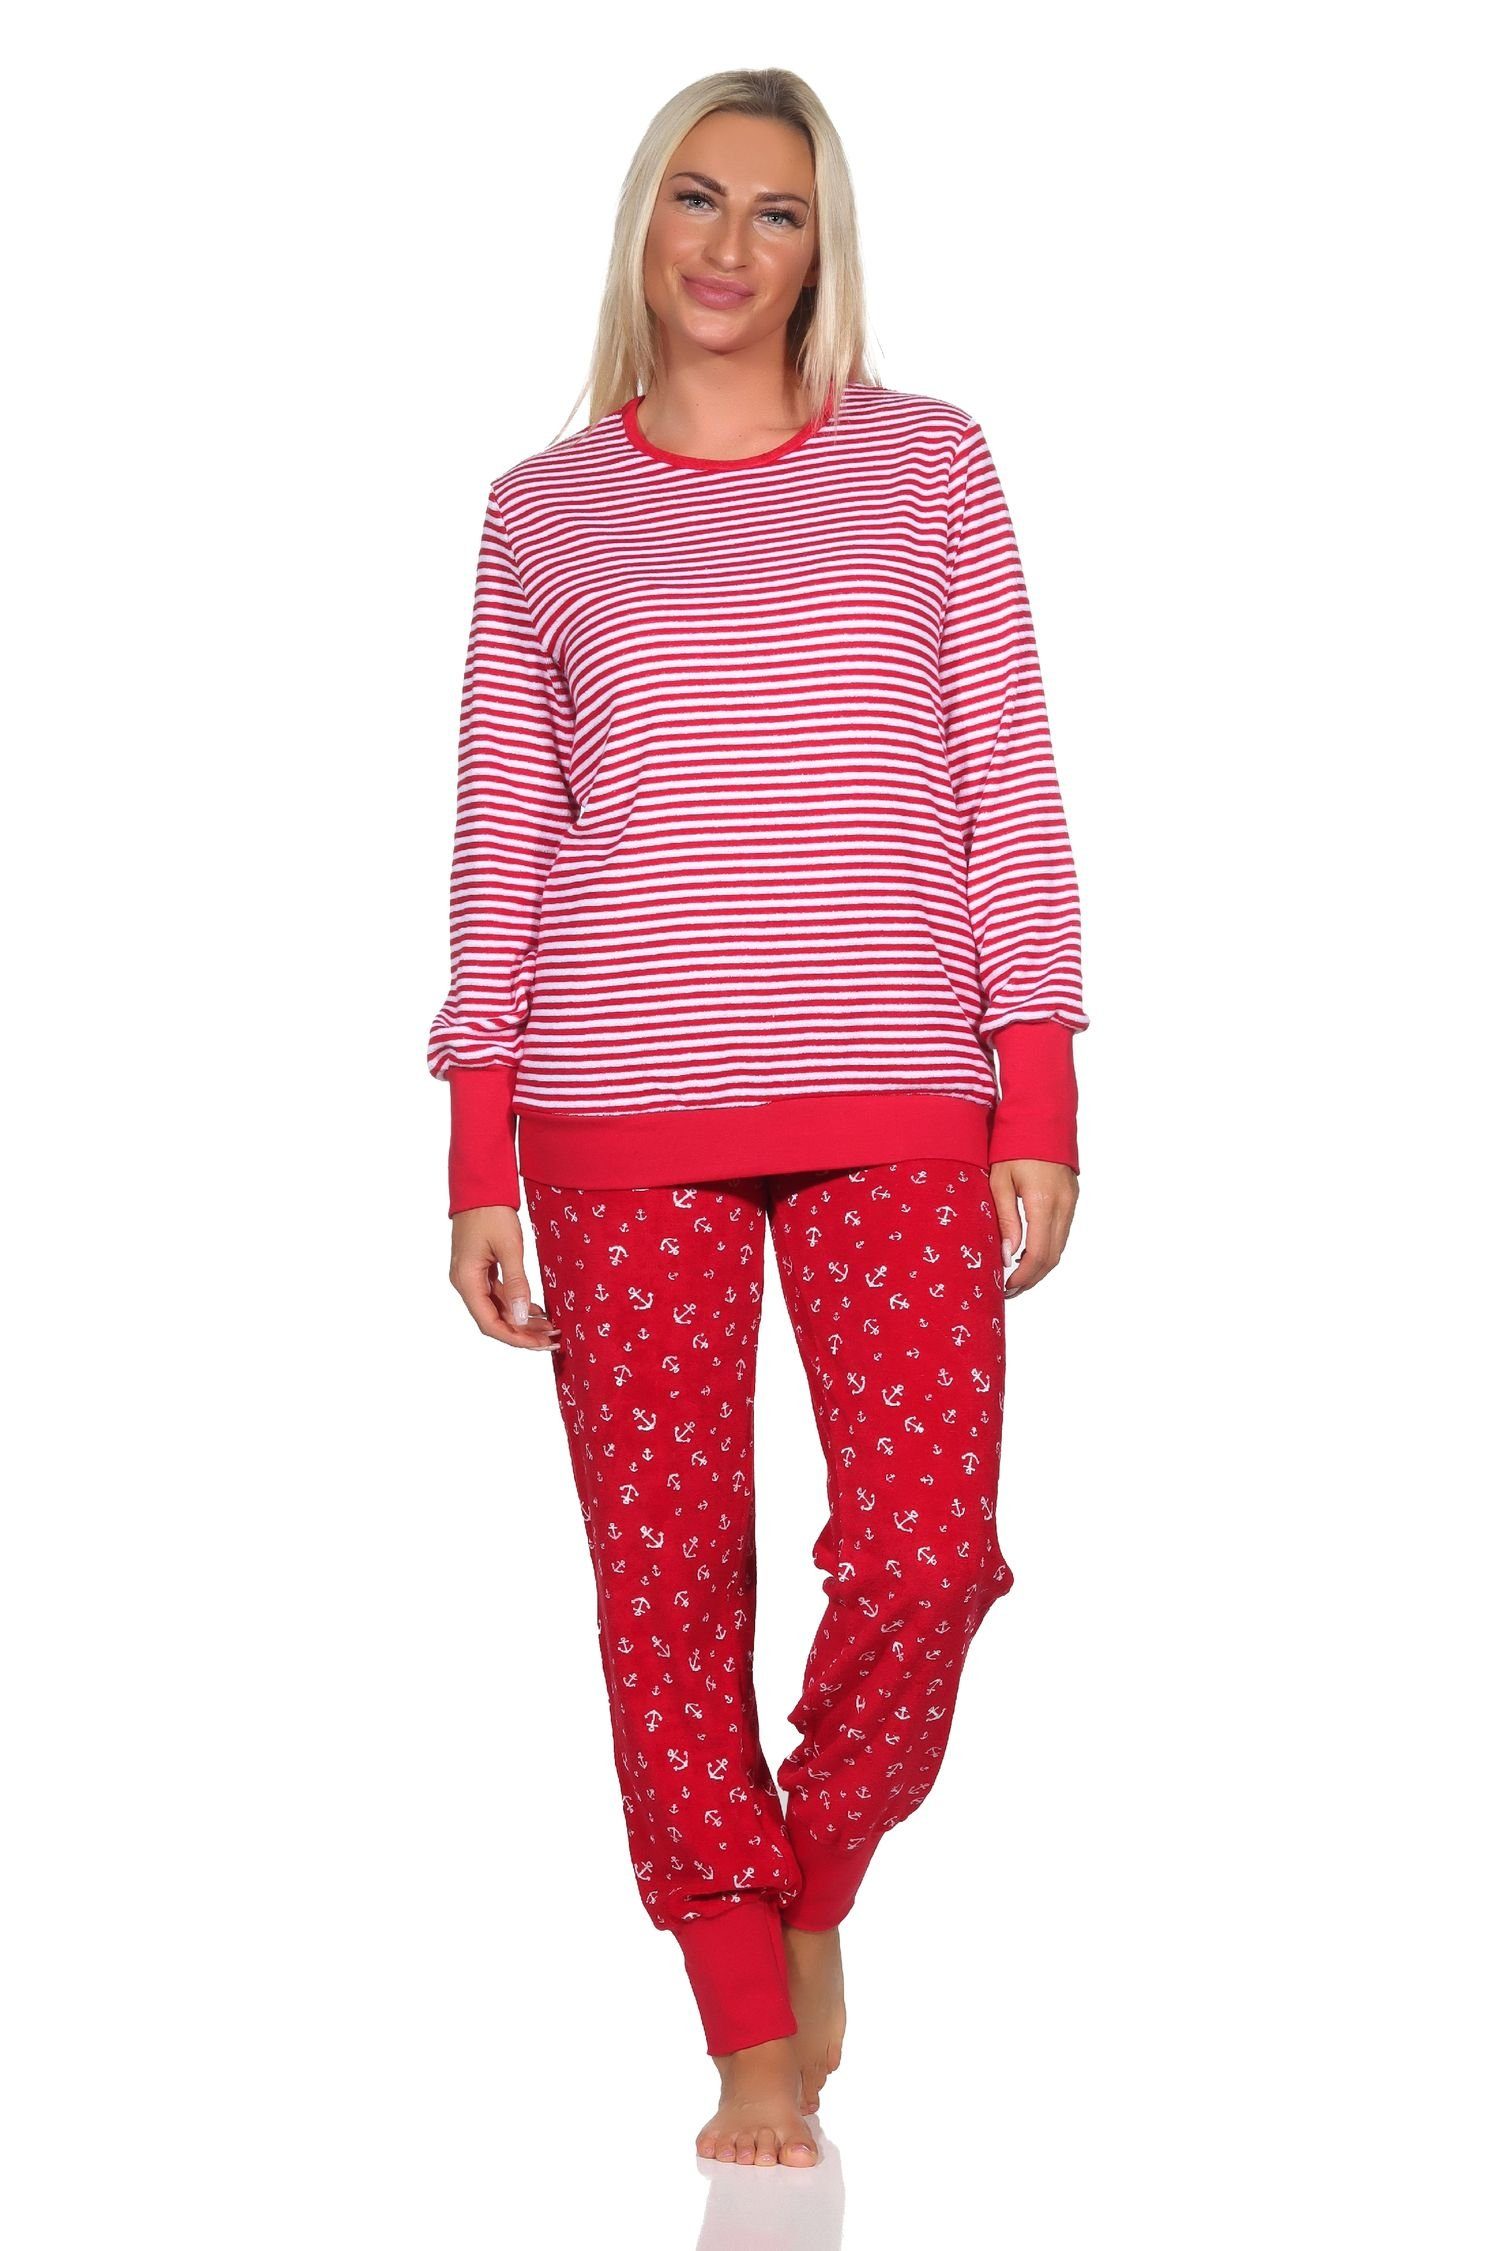 Damen und rot1 Normann Motiv Optik Anker Normann Schlafanzug maritimer Pyjama in Frottee